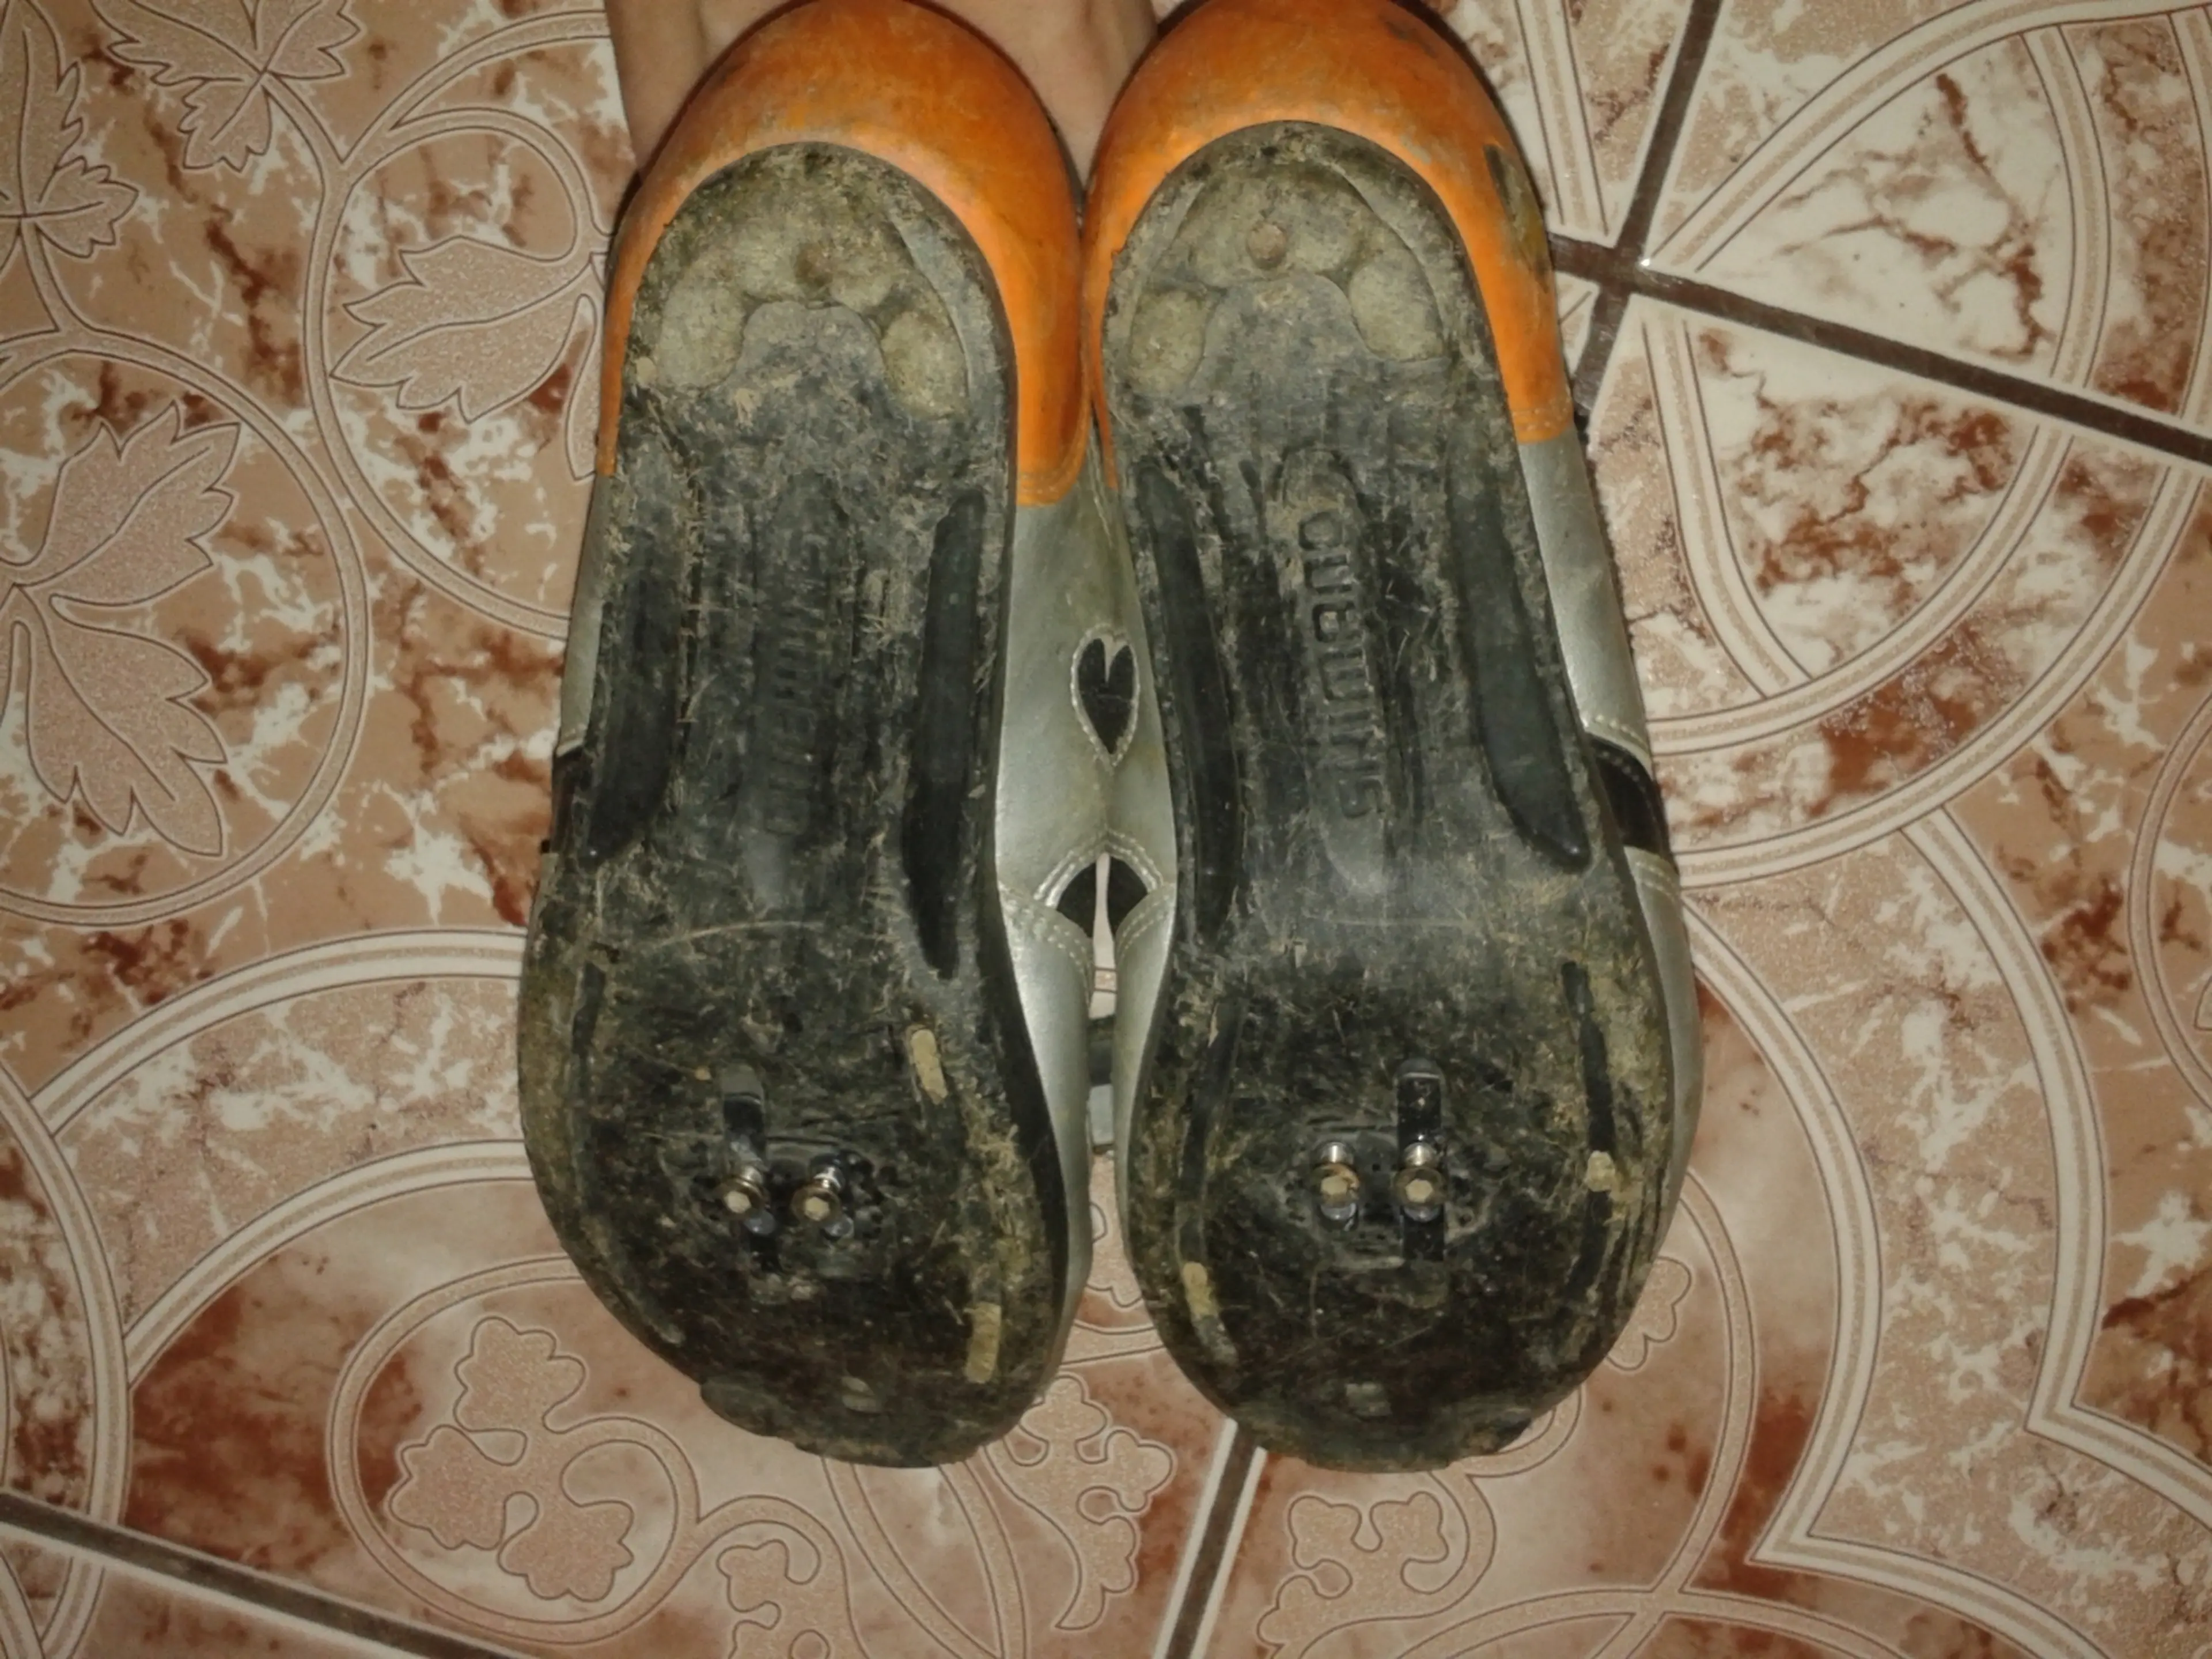 3. Pantof Shimano marime 42/26.5cm